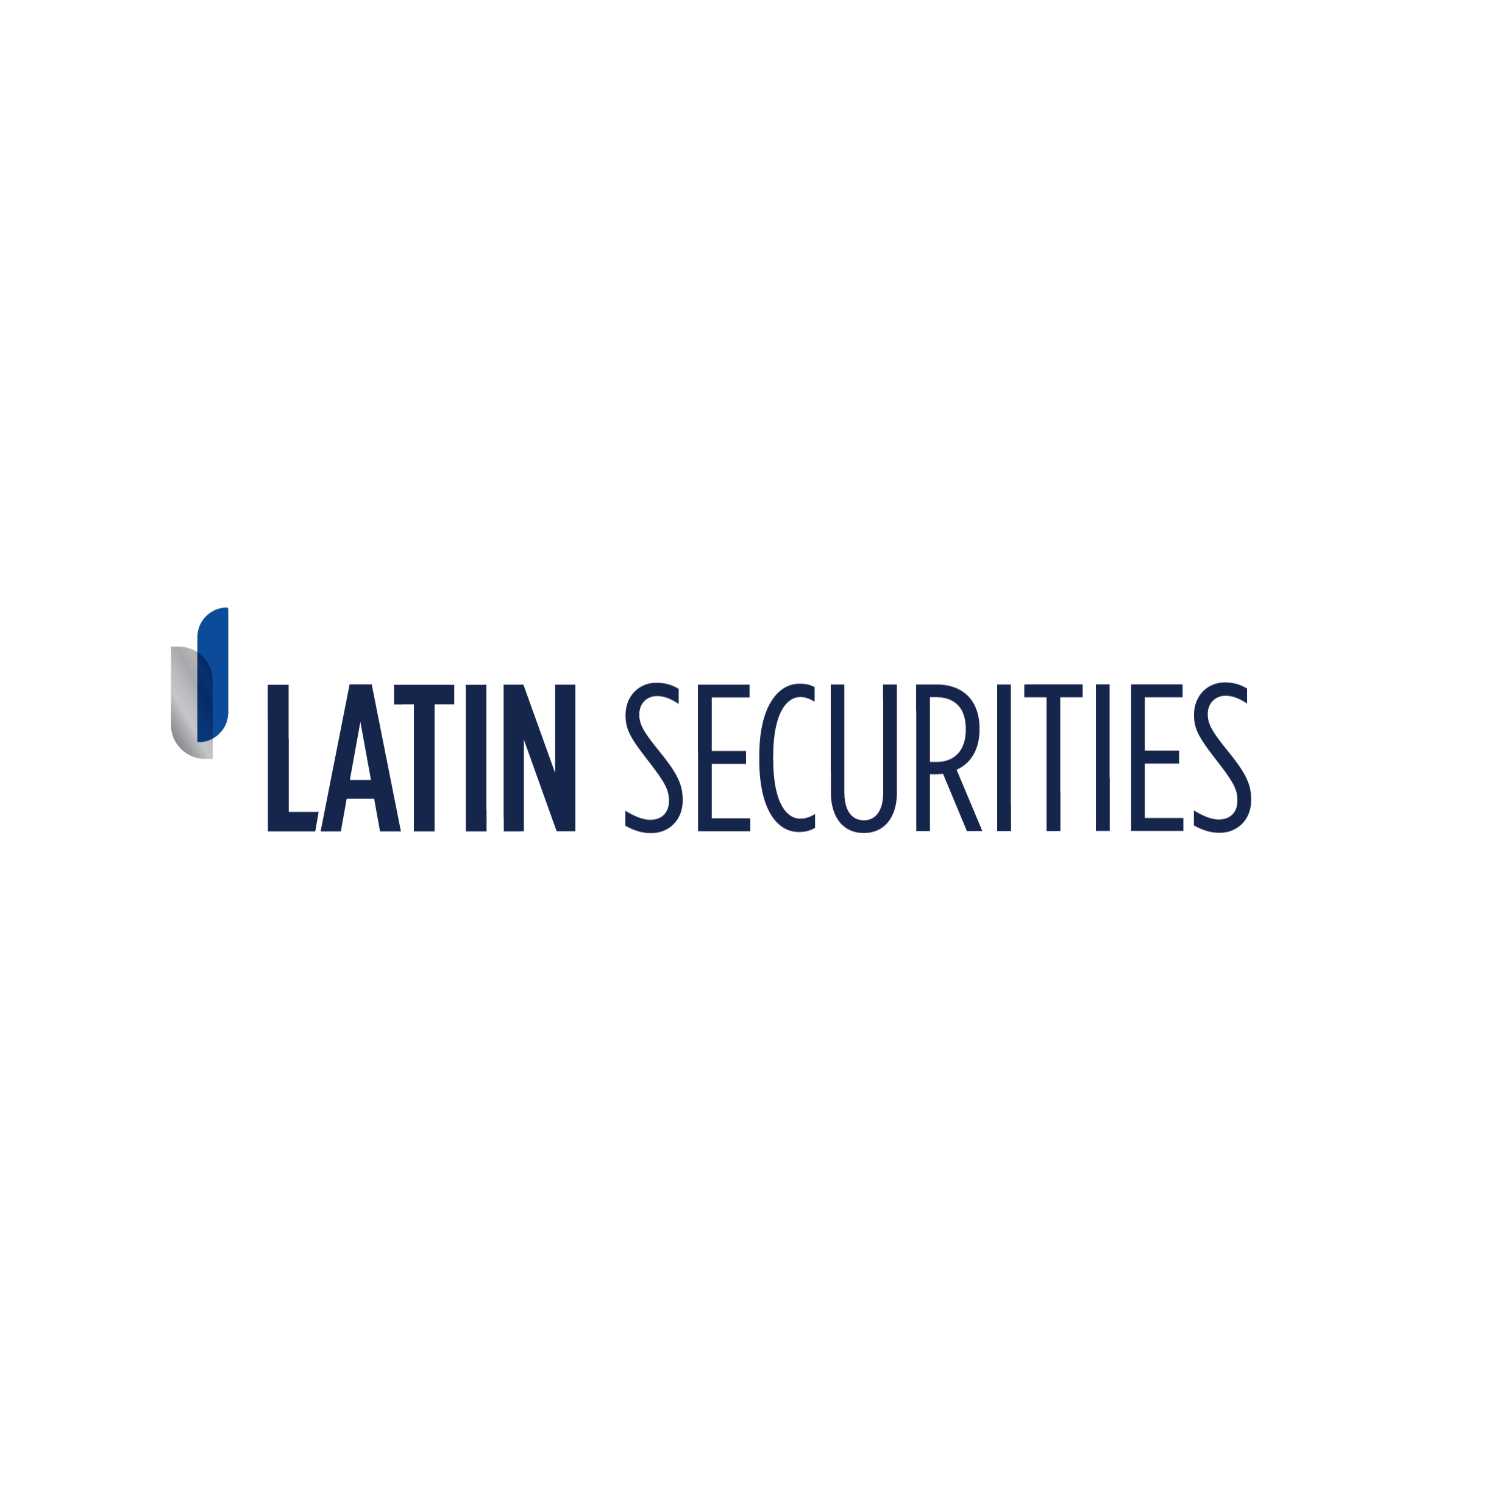 Latin Securities - Research Department